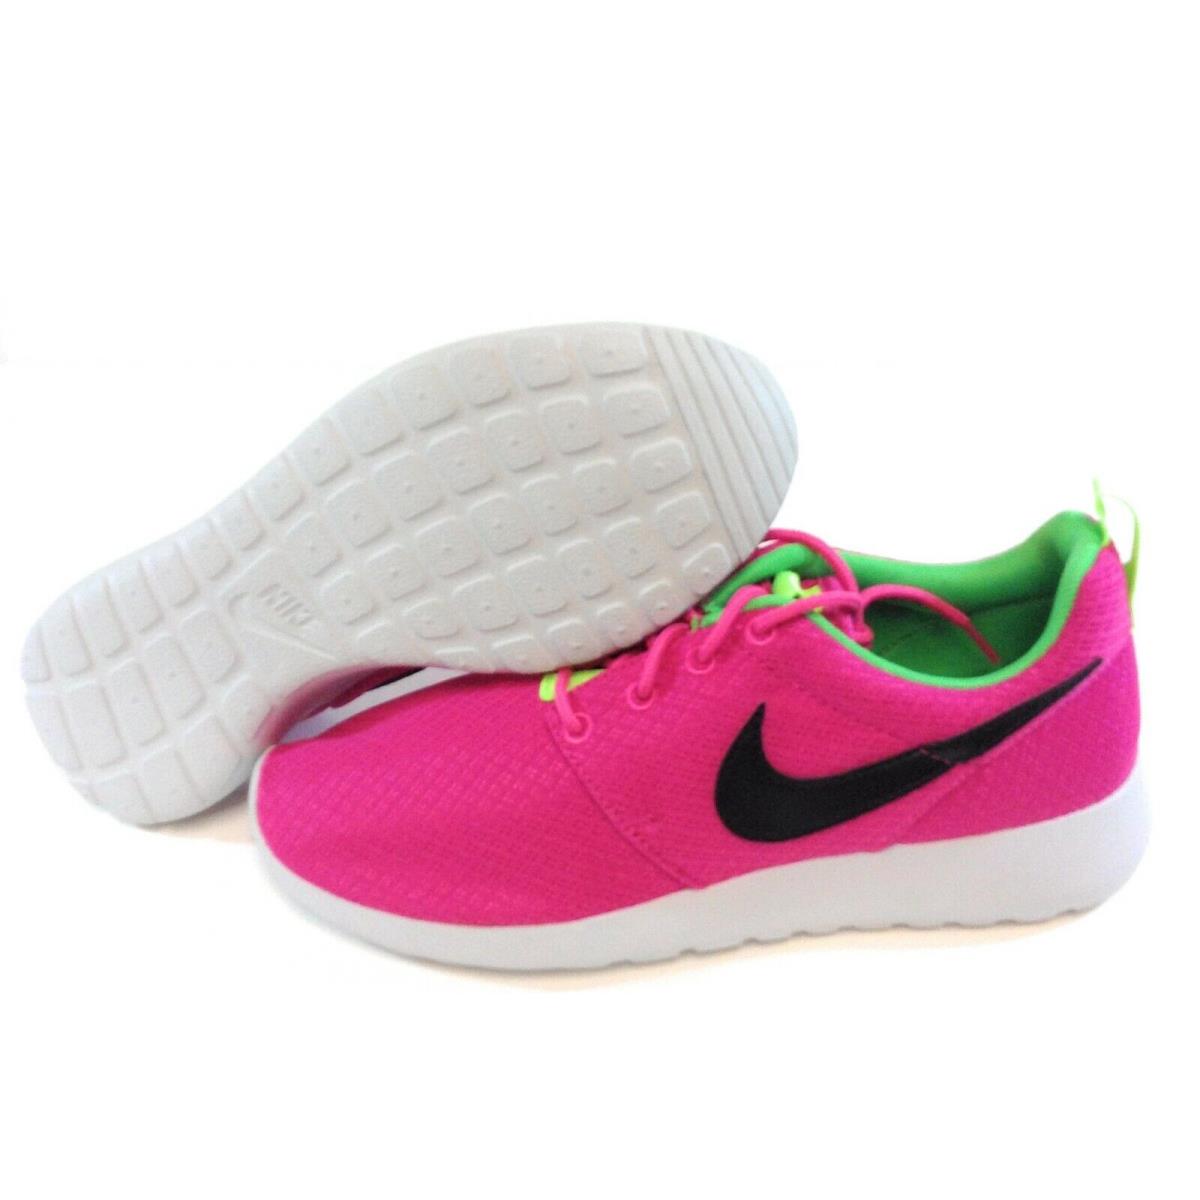 Girls Kids Youth Nike Rosherun 599729 607 Hot Pink Green Spark Sneakers Shoes - Pink